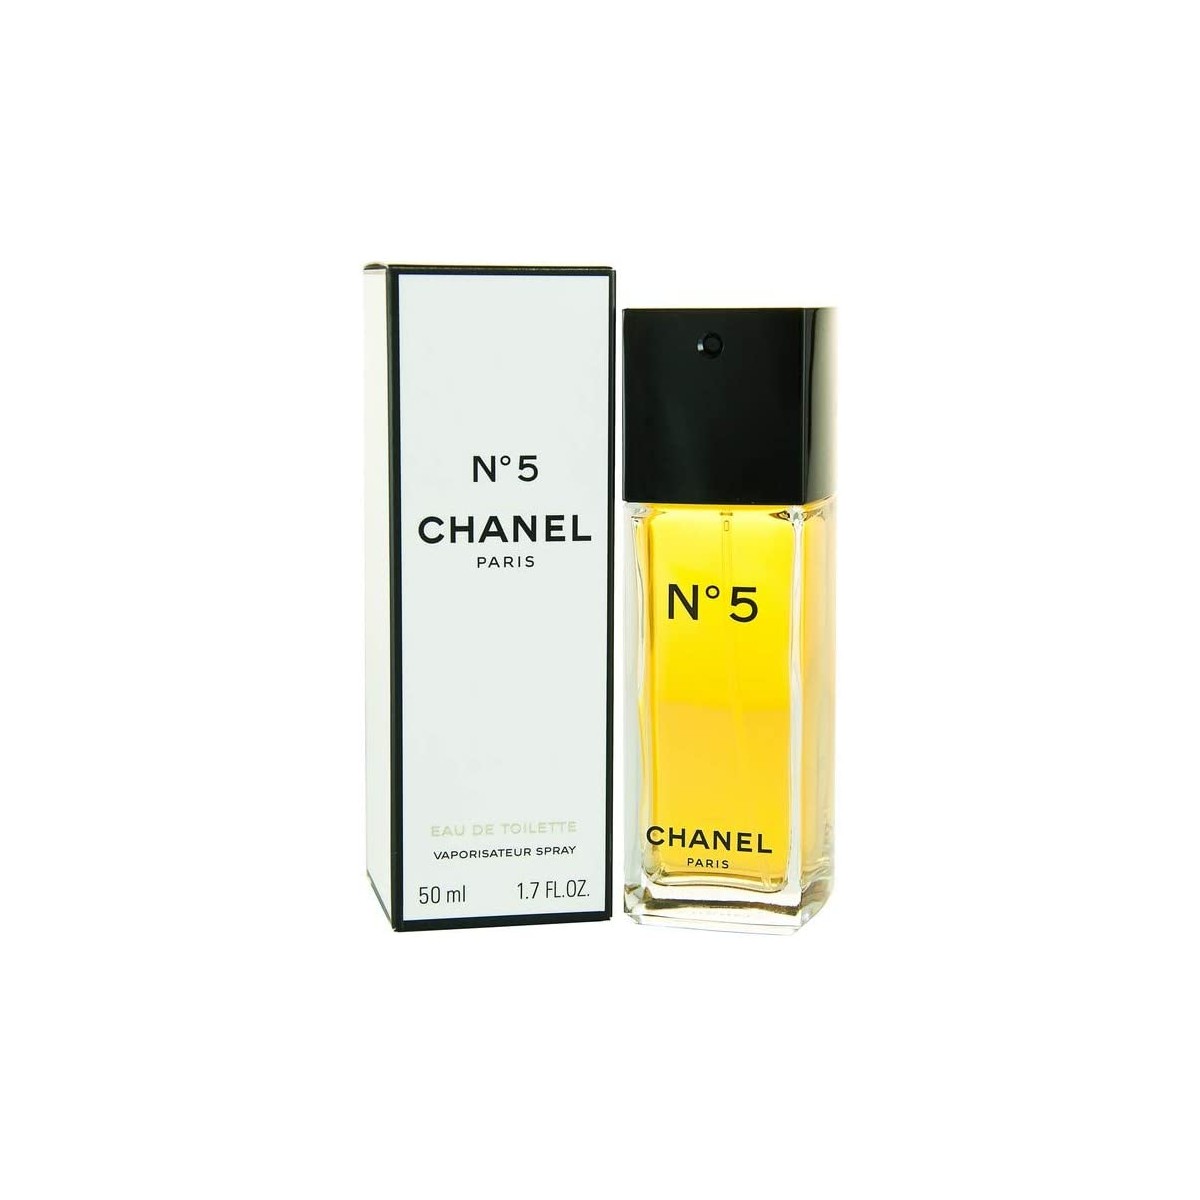 Profumo Chanel N° 5 Eau De Toilette, idea regalo